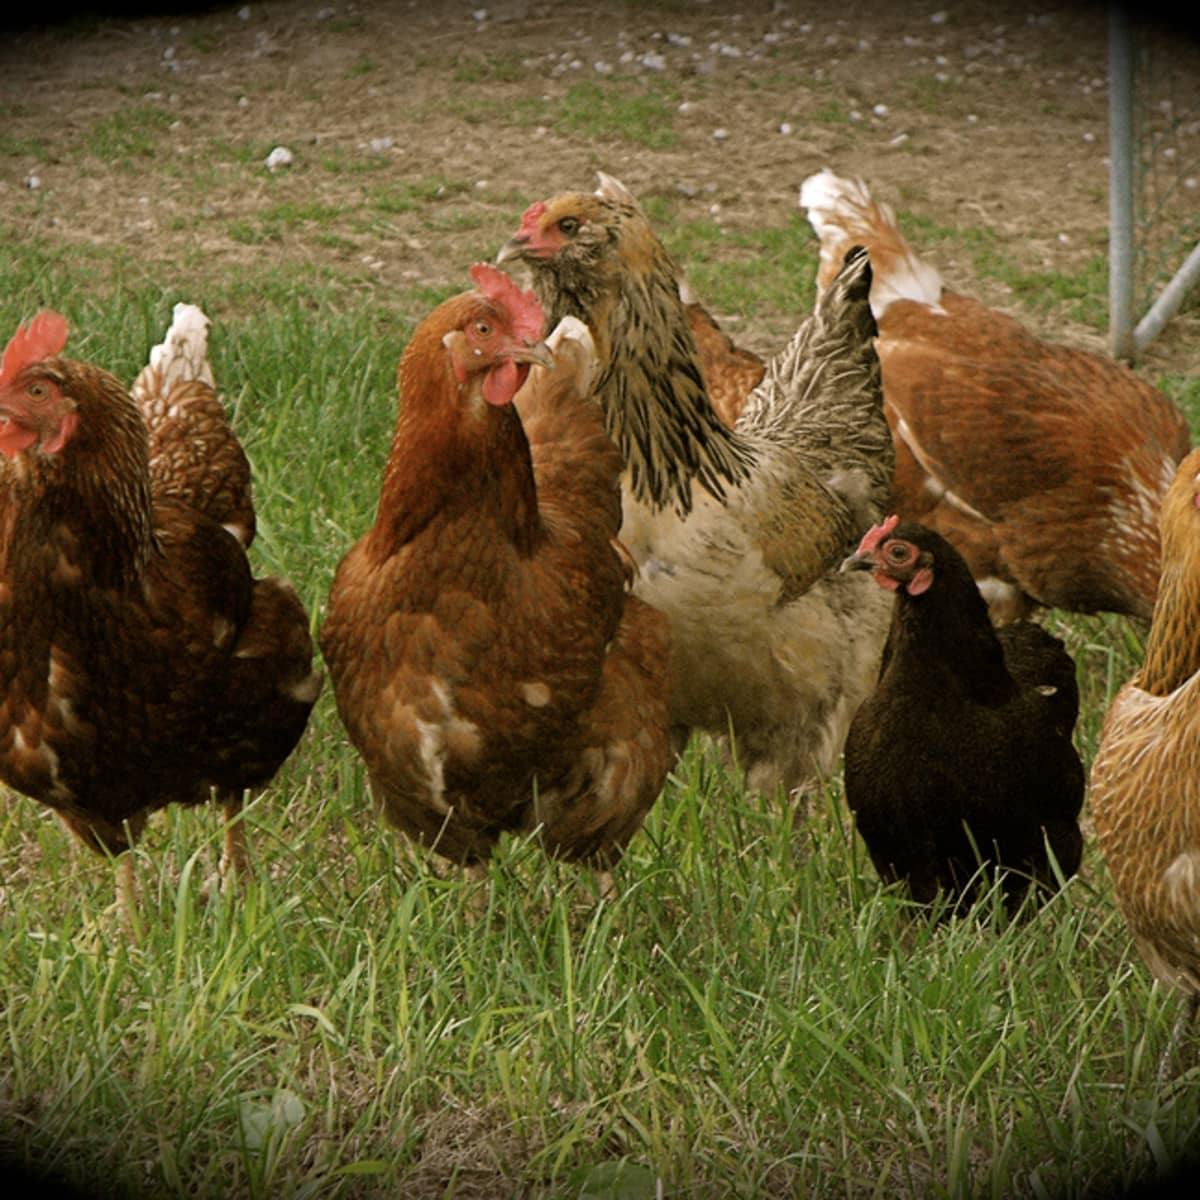 Free Range vs. Chicken Run: Which is Best for Homesteading?